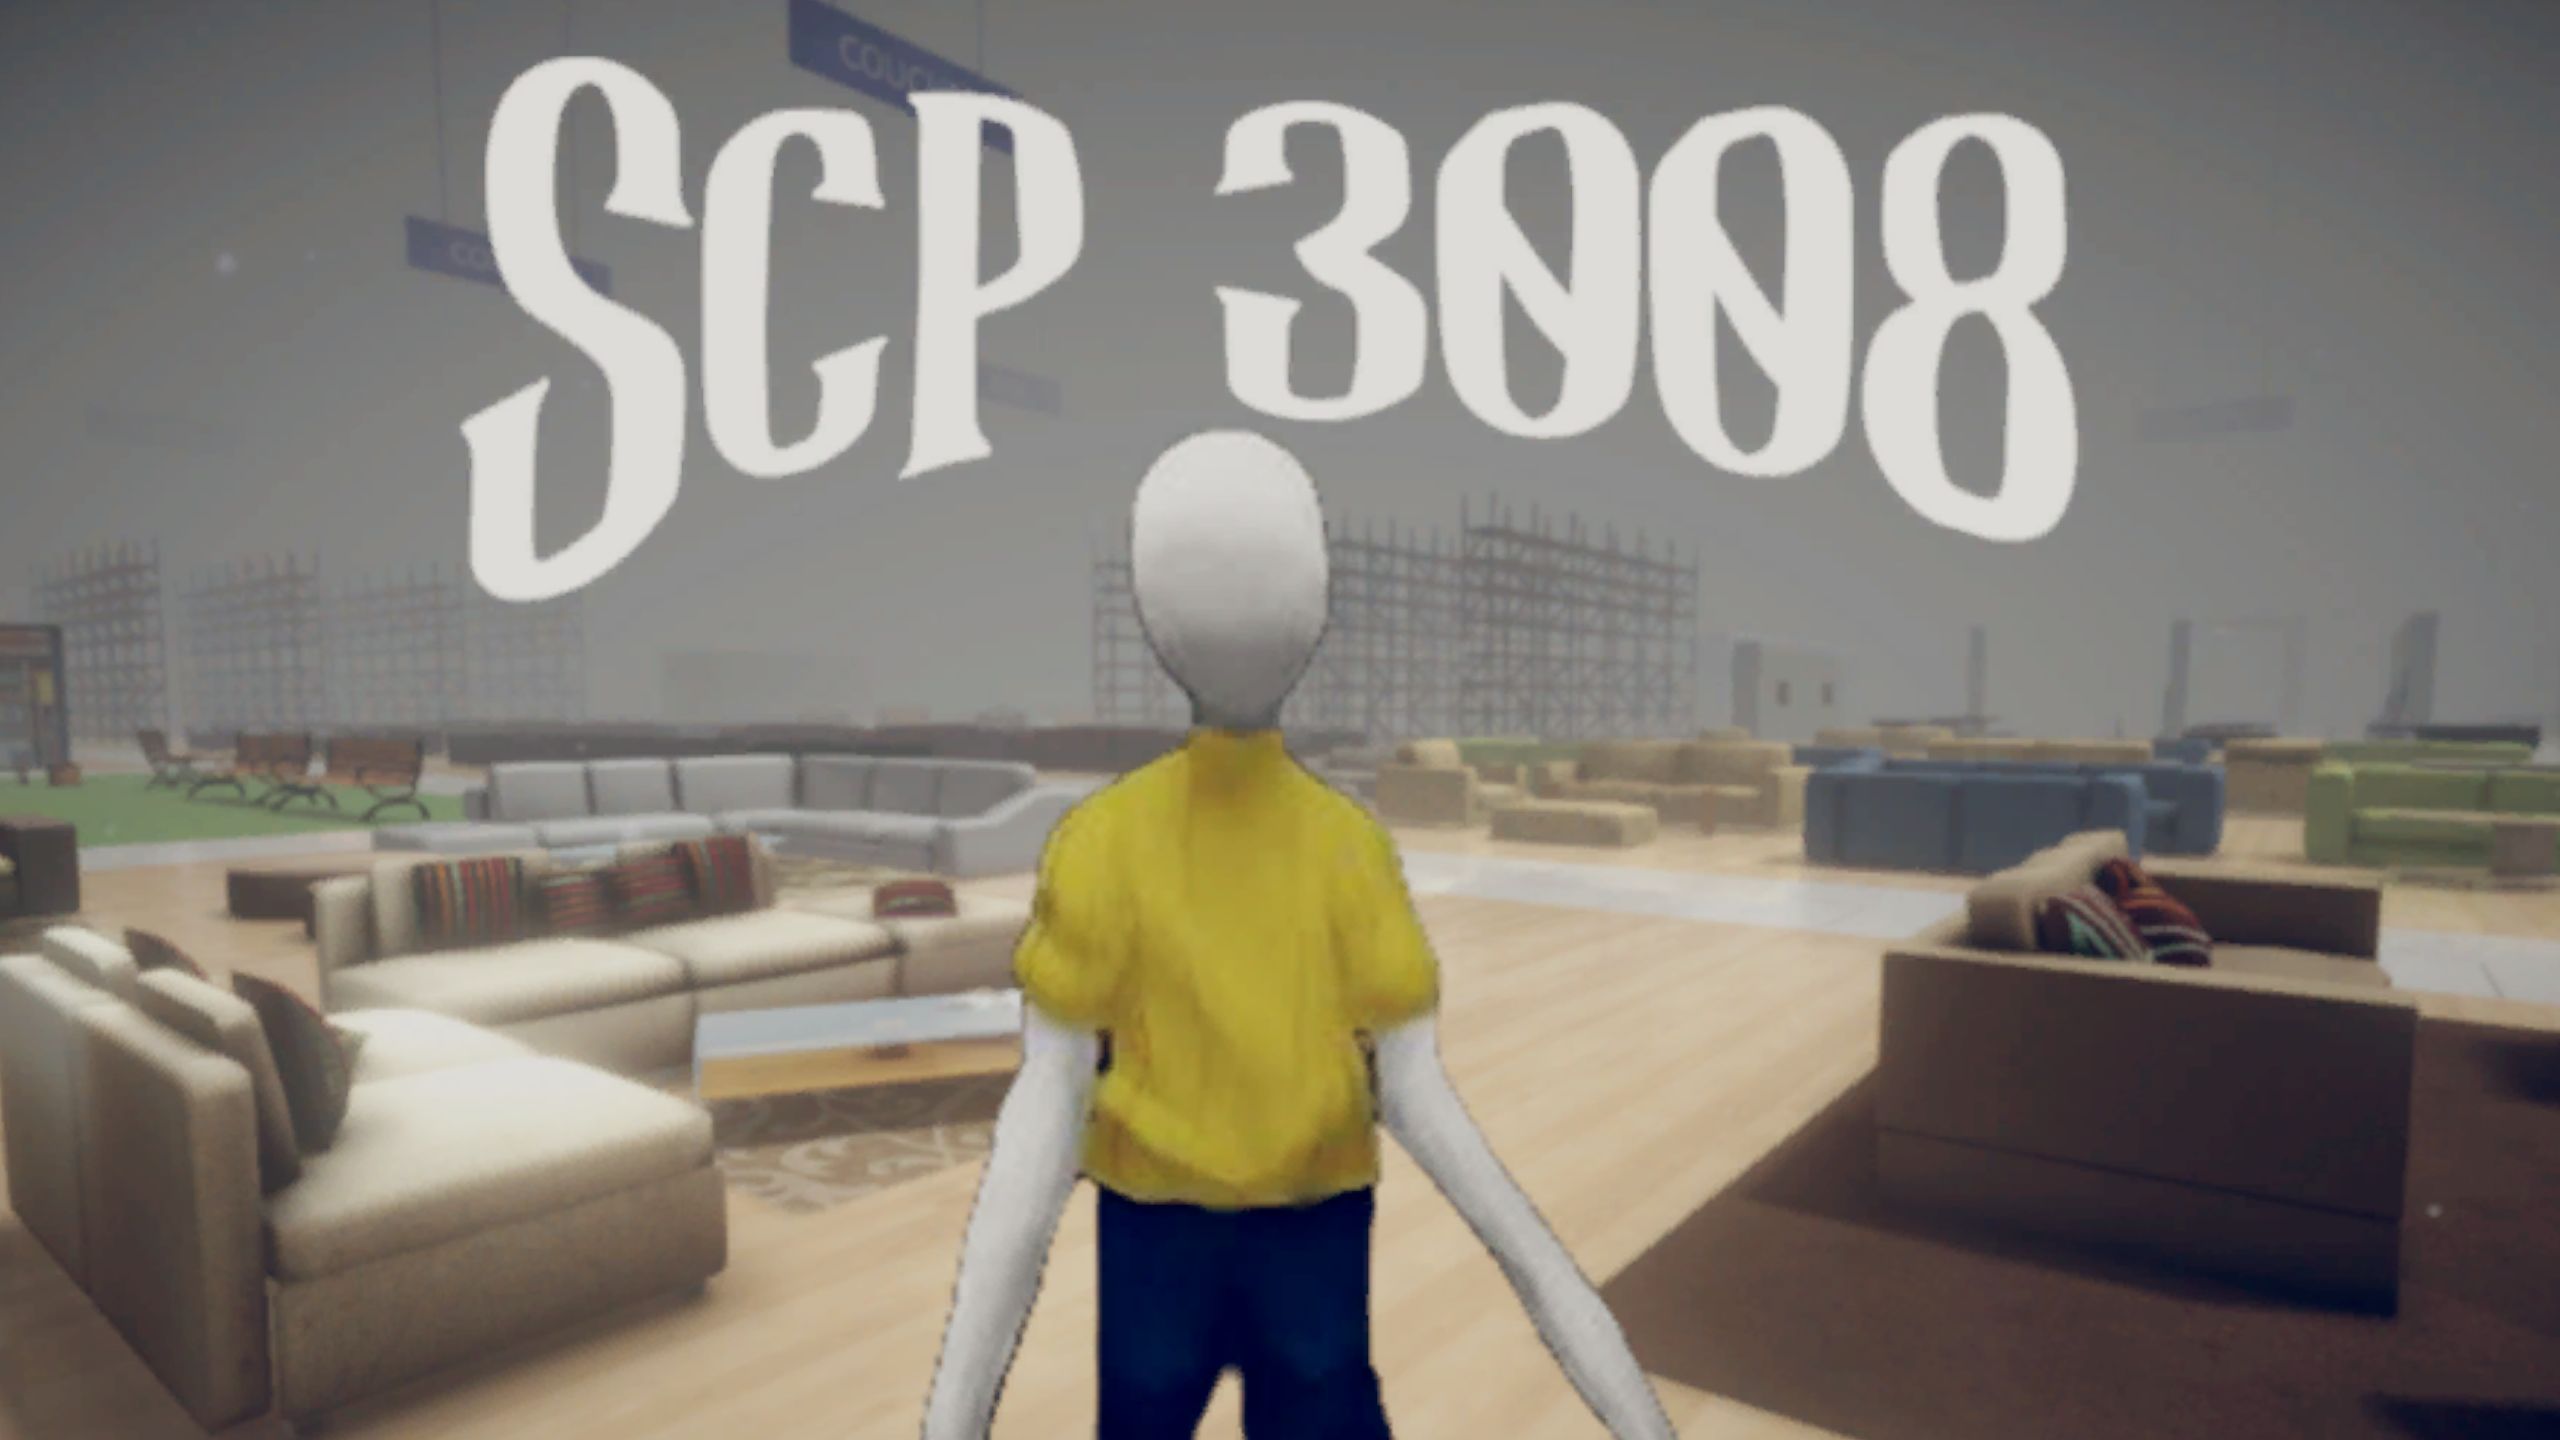 My SCP 3008 game is in public beta testing ^SCP3008EscapeIKEA : r/RecRoom